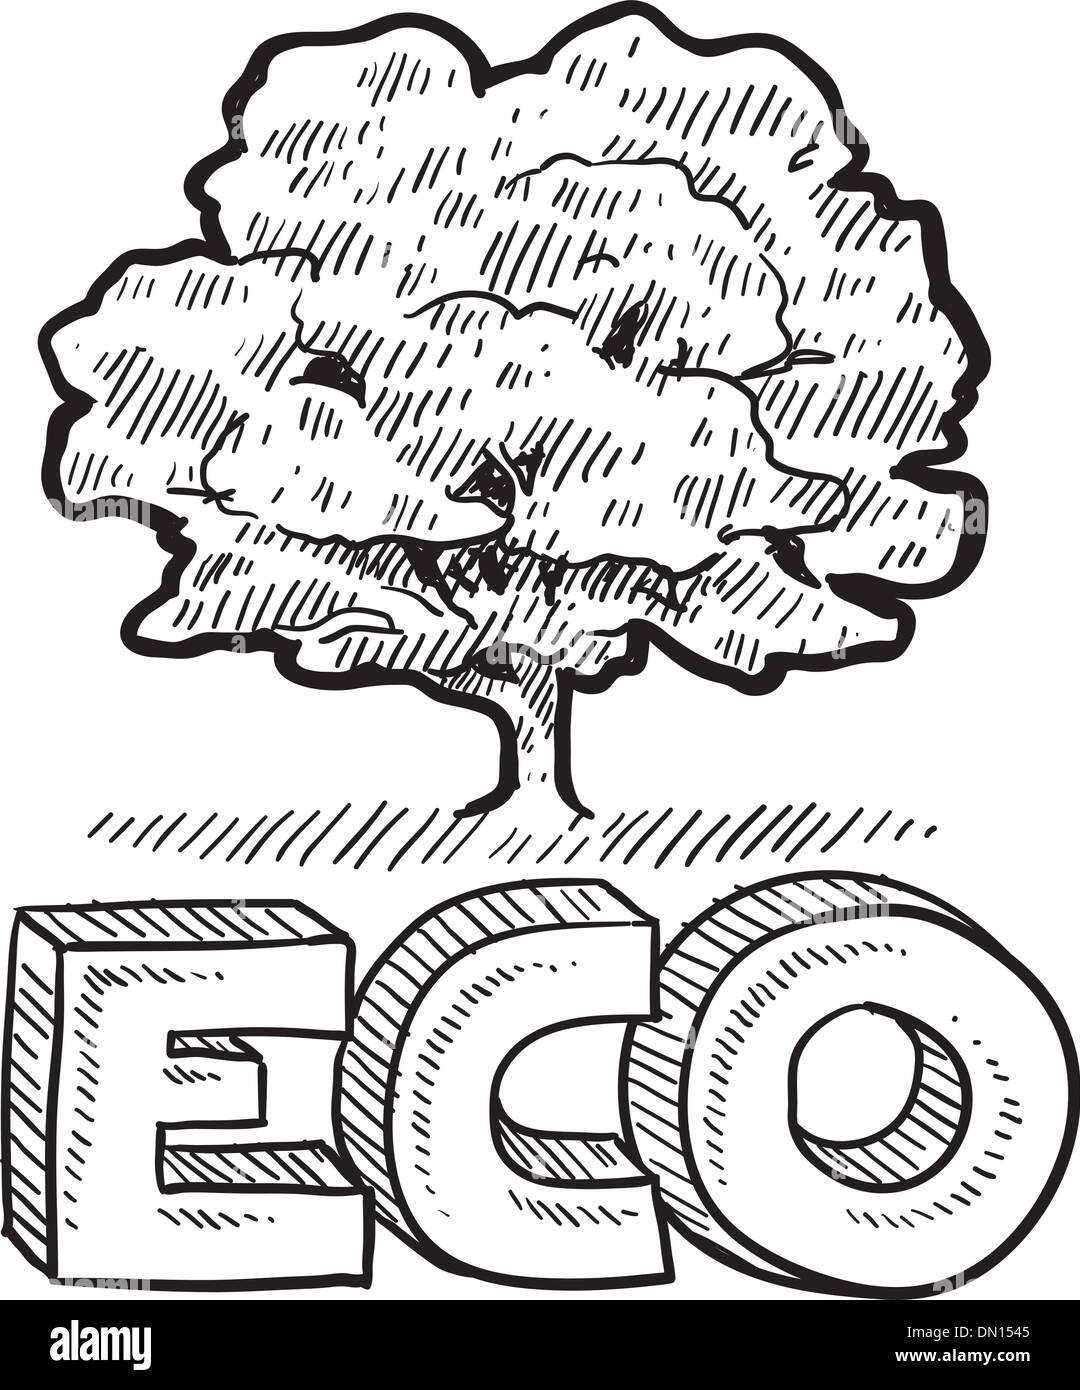 Eco or nature emblem sketch Stock Vector